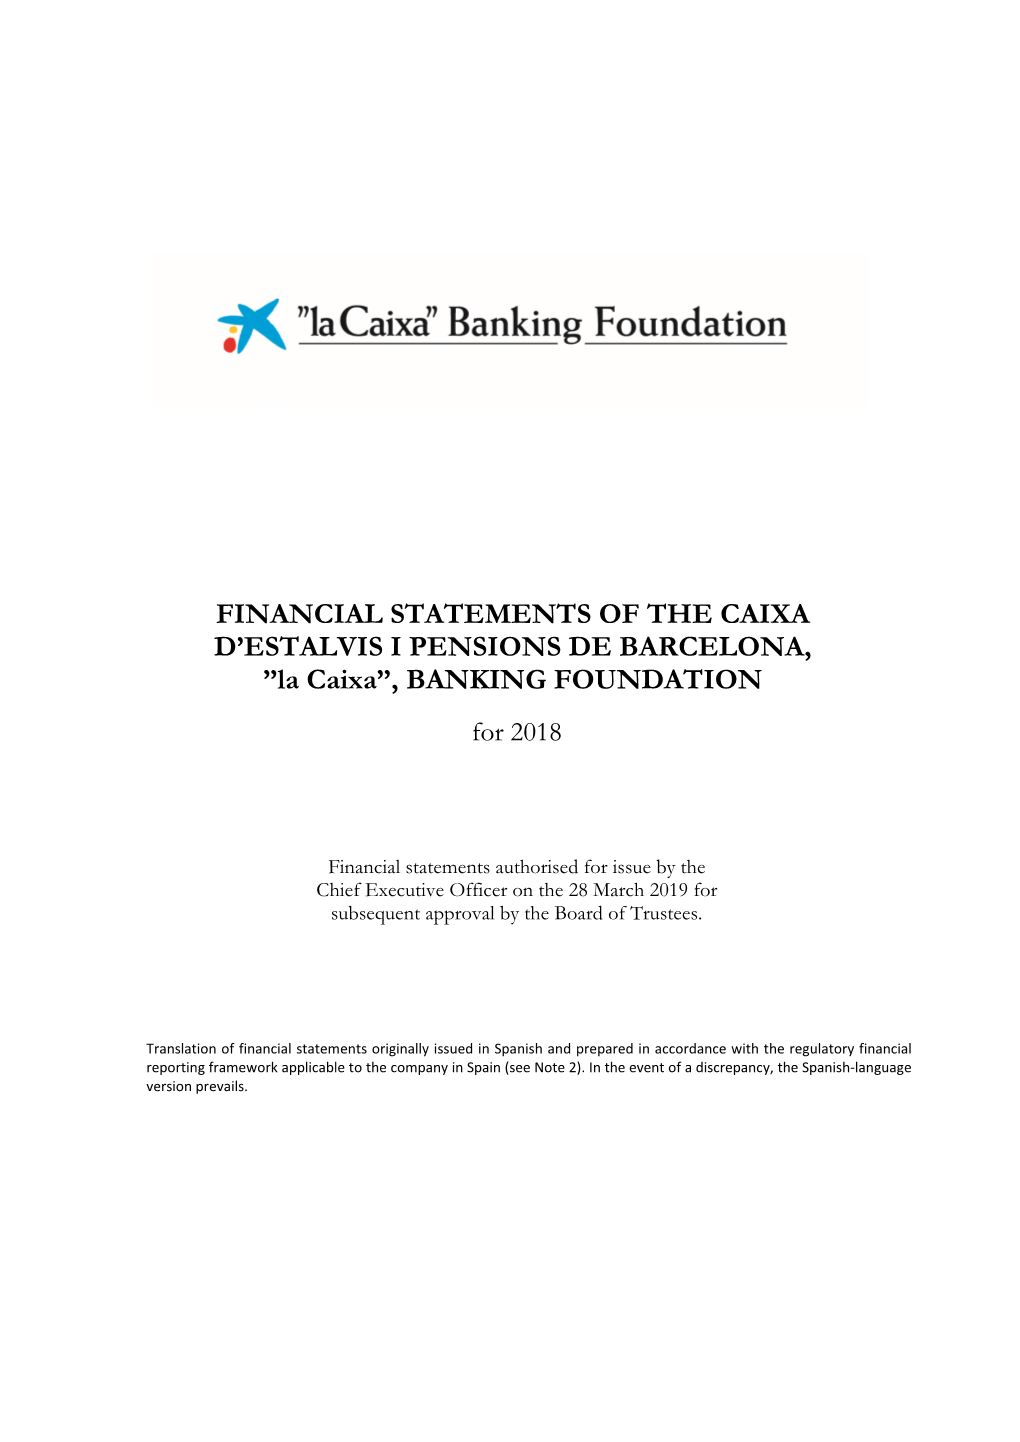 ”La Caixa”, BANKING FOUNDATION for 2018